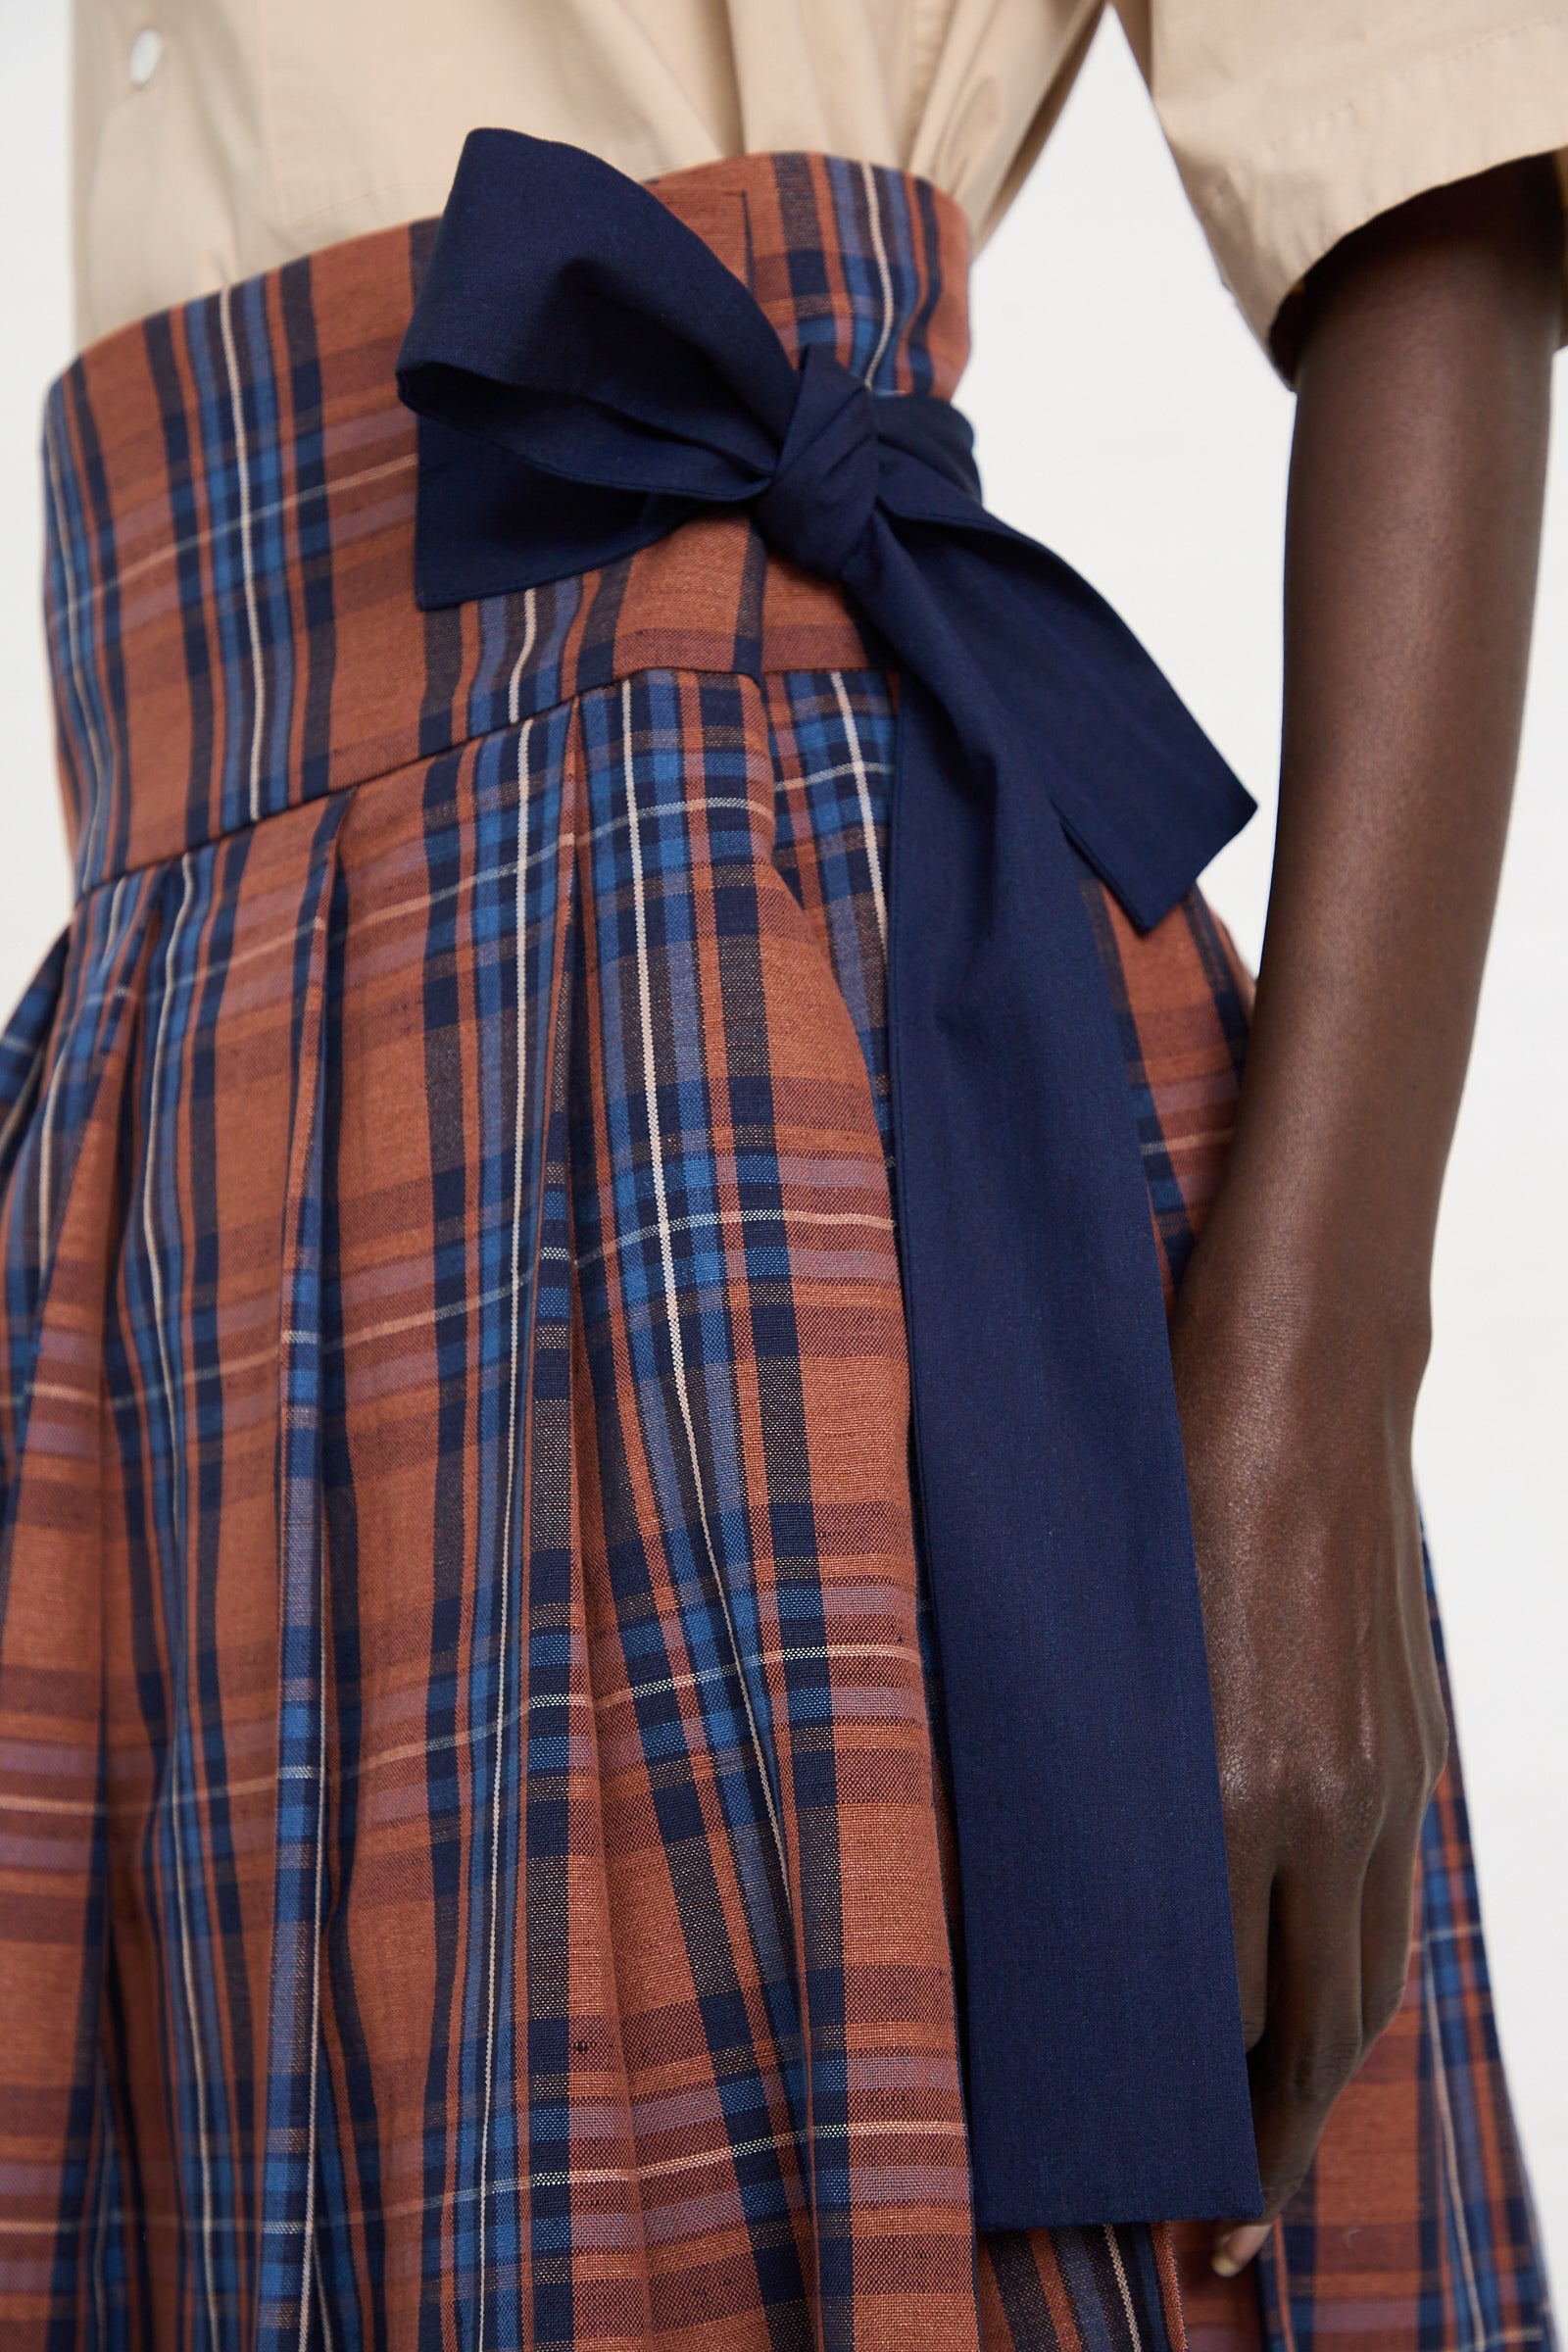 Cotton Linen Madras Plaid Cloth Pleated Wrap Maxi Skirt in Brick